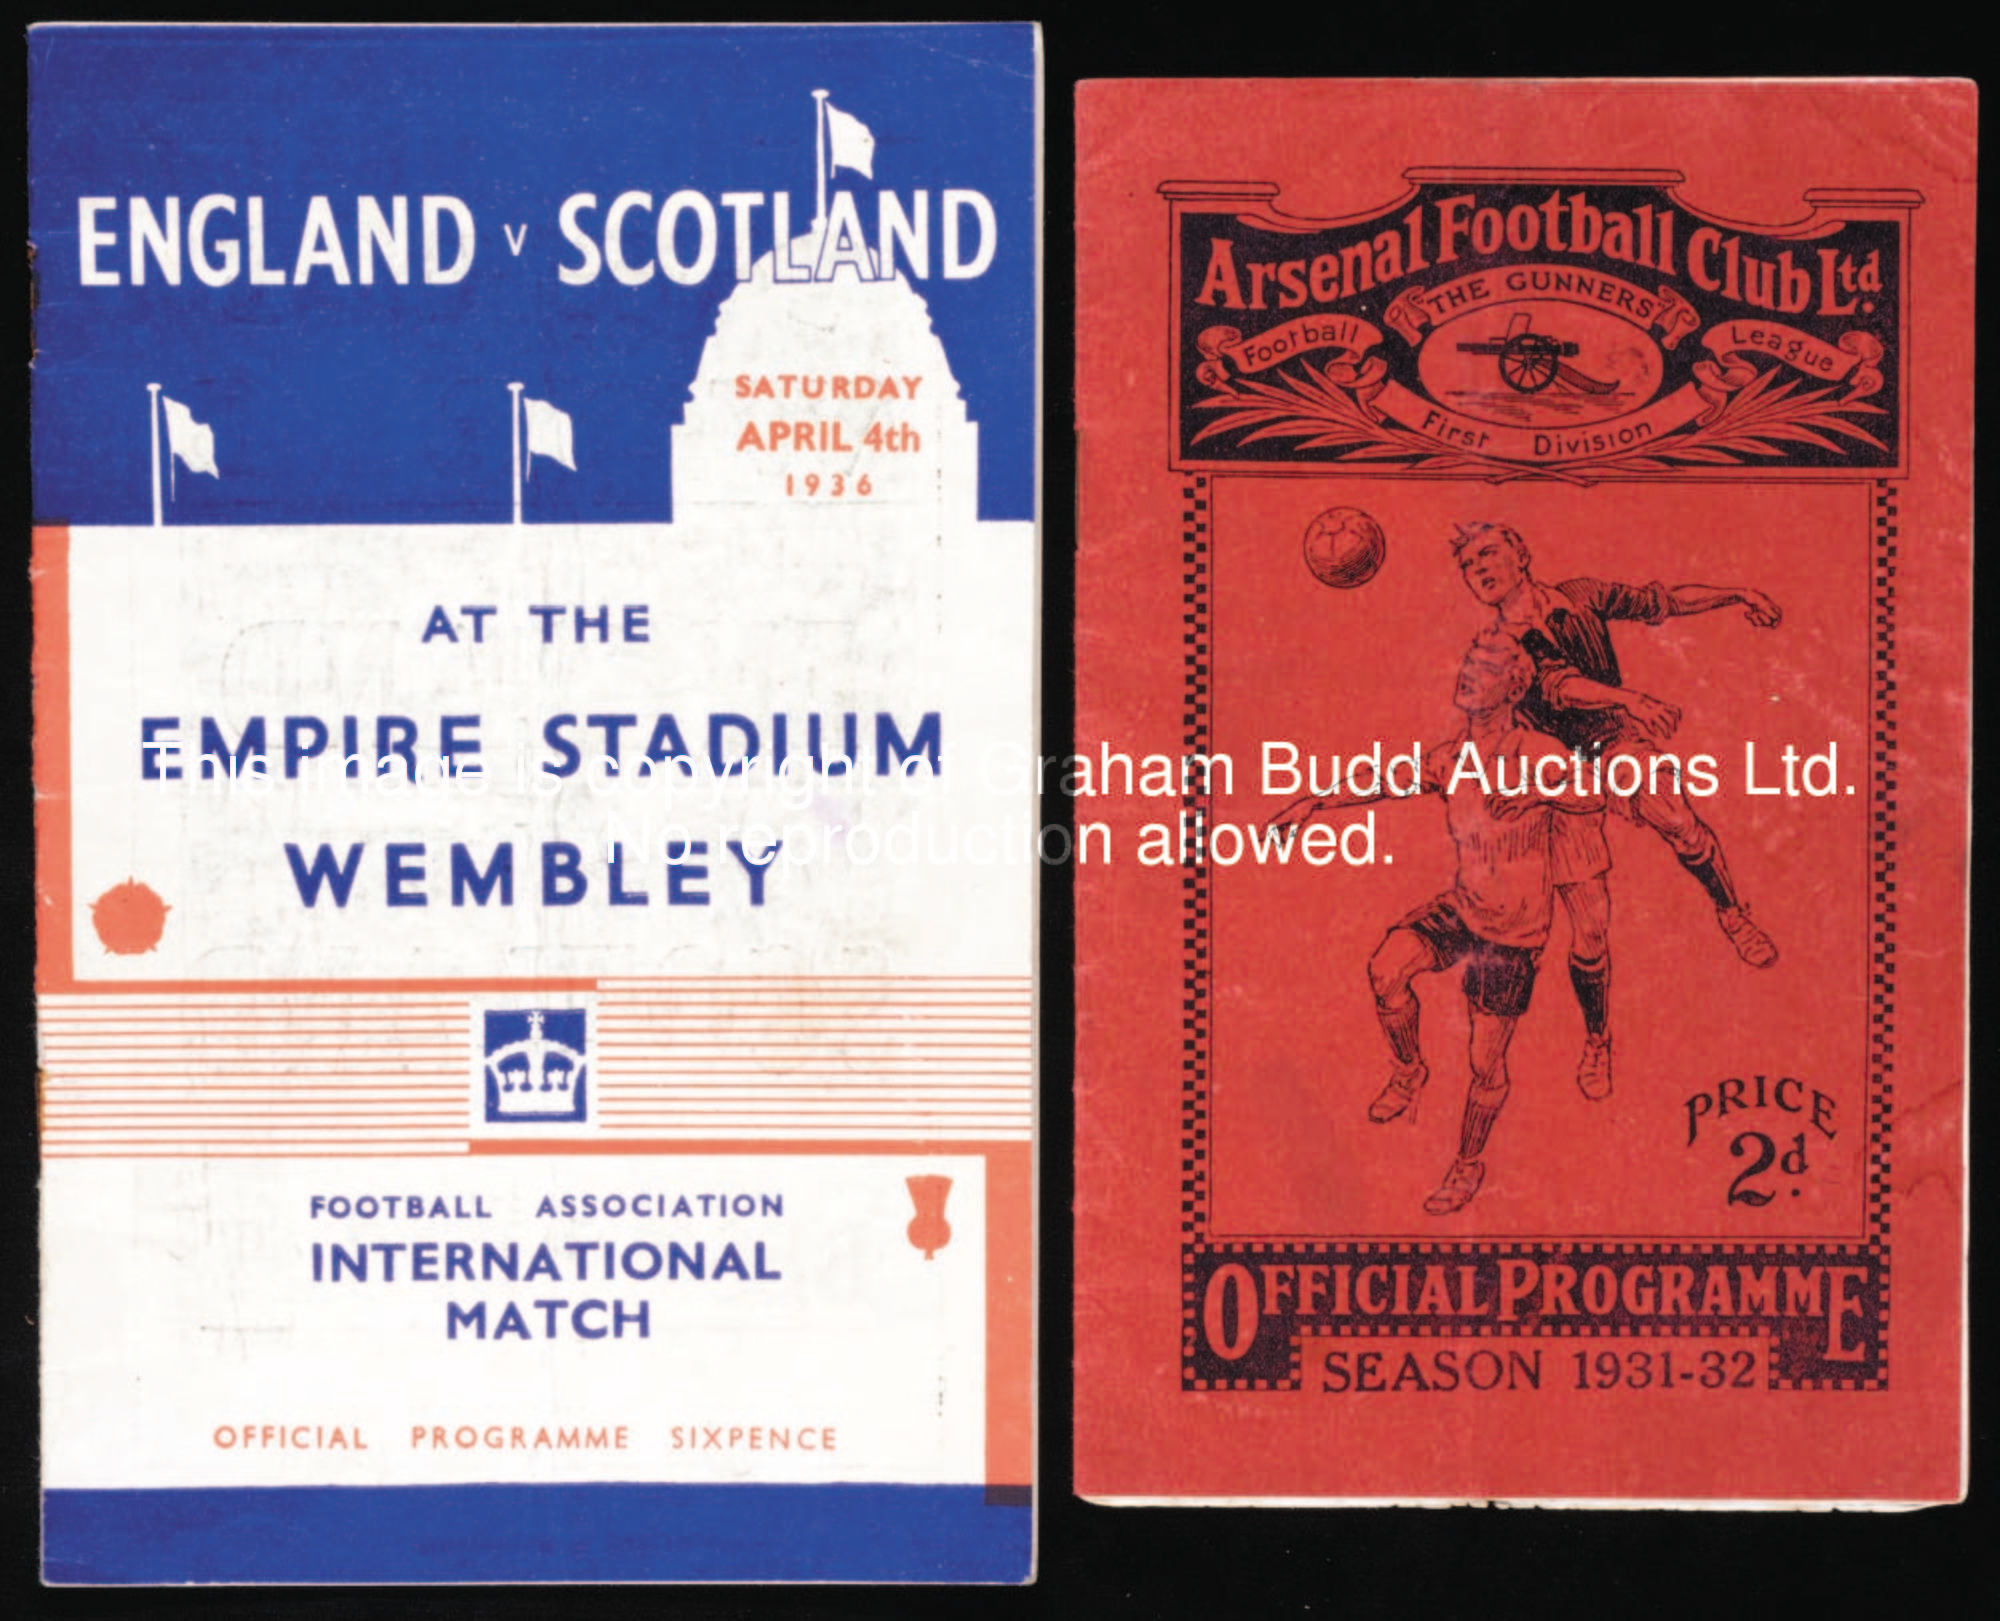 Two England international programmes, Spain at Highbury 9.12.31 & Scotland at Wembley 4.4.36